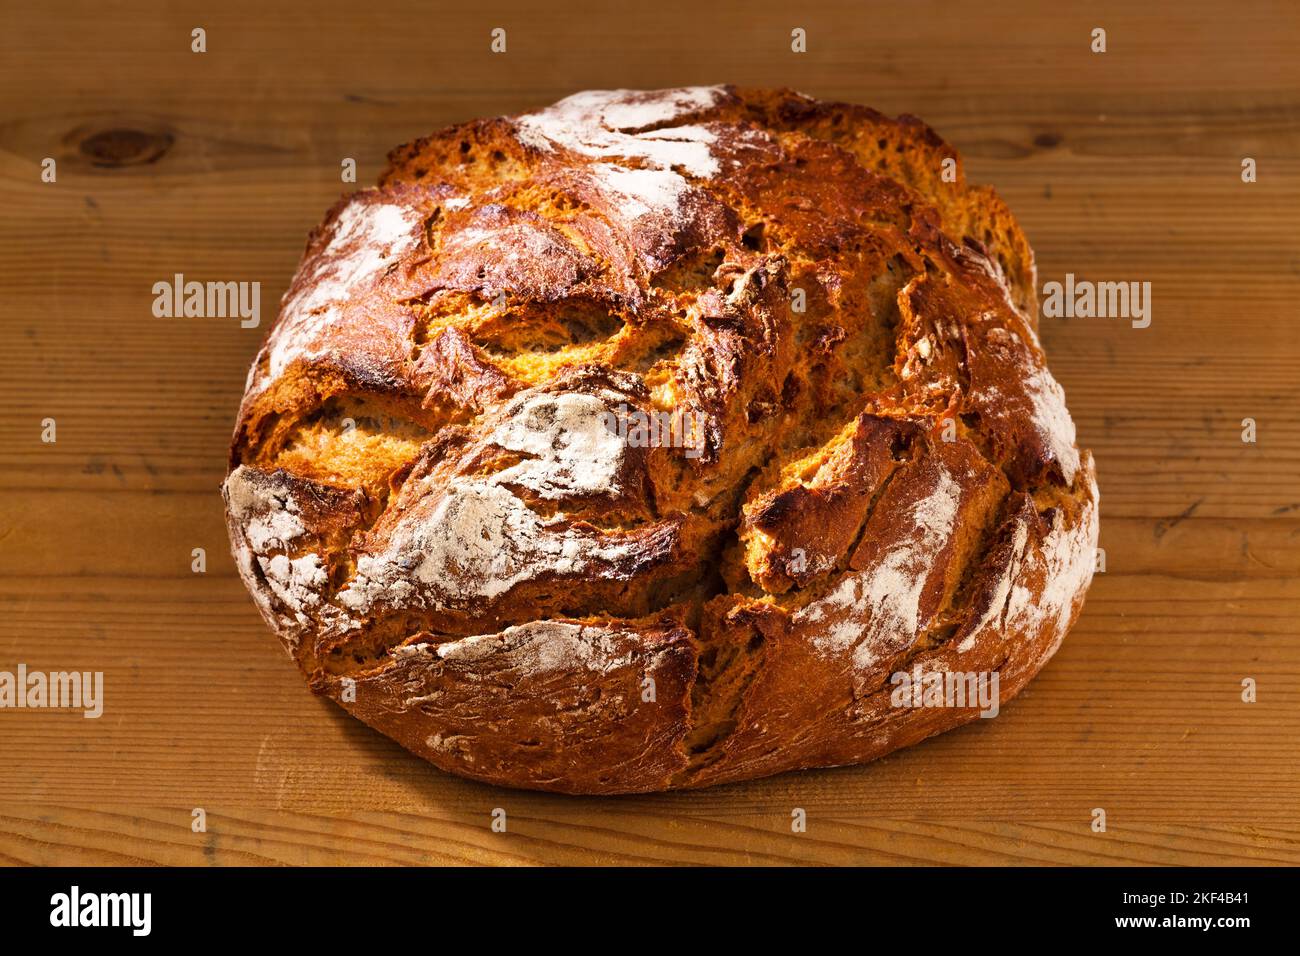 Ein  Laib Brot. Gesunde Ernährung durch frische Backwaren, Rustikales Brot, Bauernbrot, Krustenbrot, Stock Photo